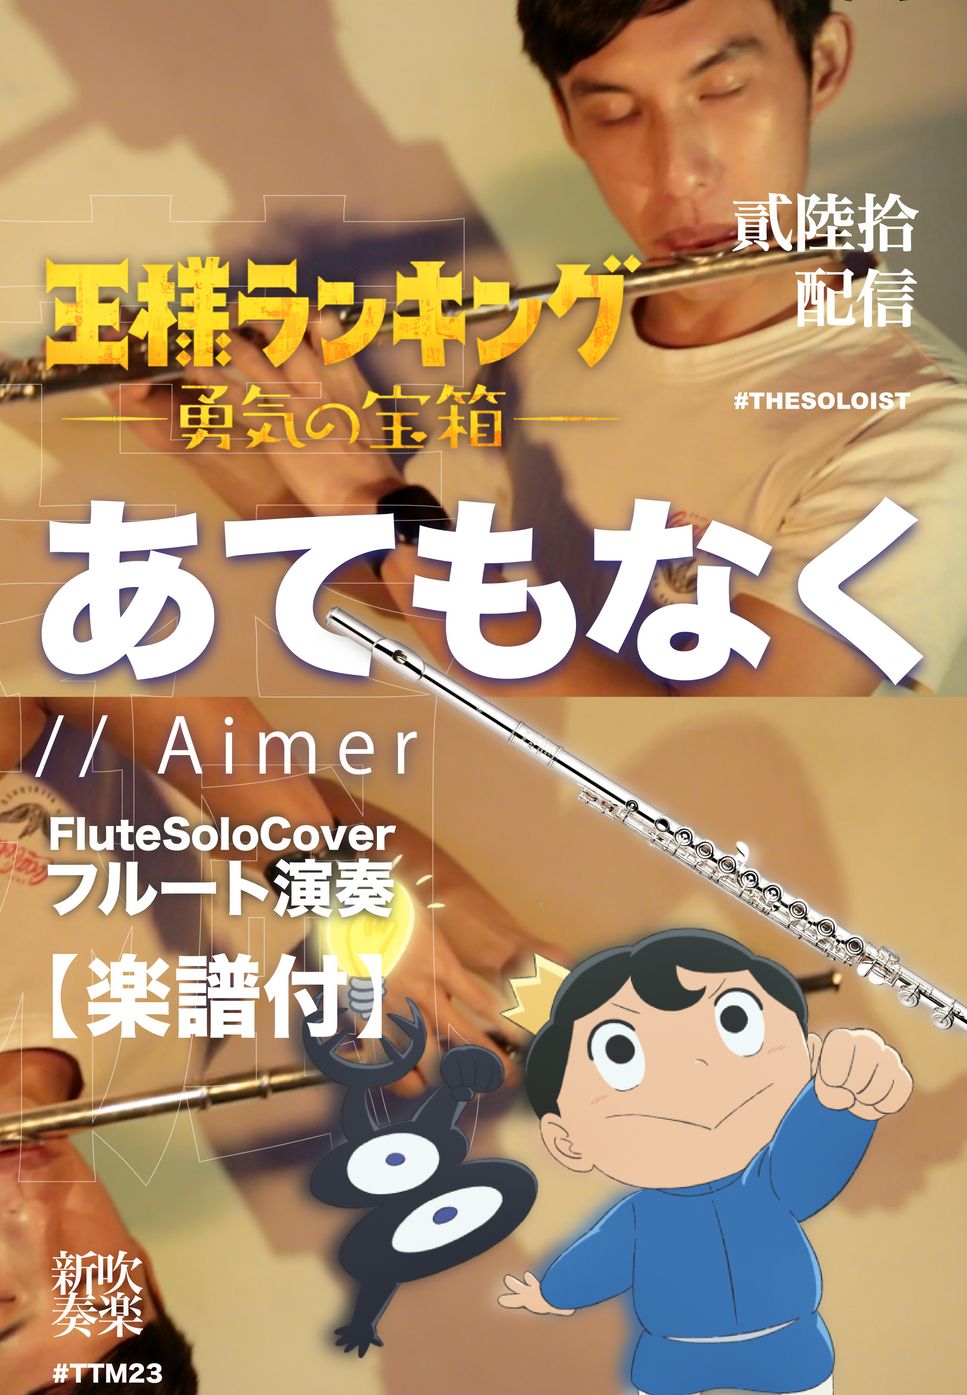 Aimer - あてもなく (C/ Bb/ F/ Eb Solo Sheet Music) by FungYip